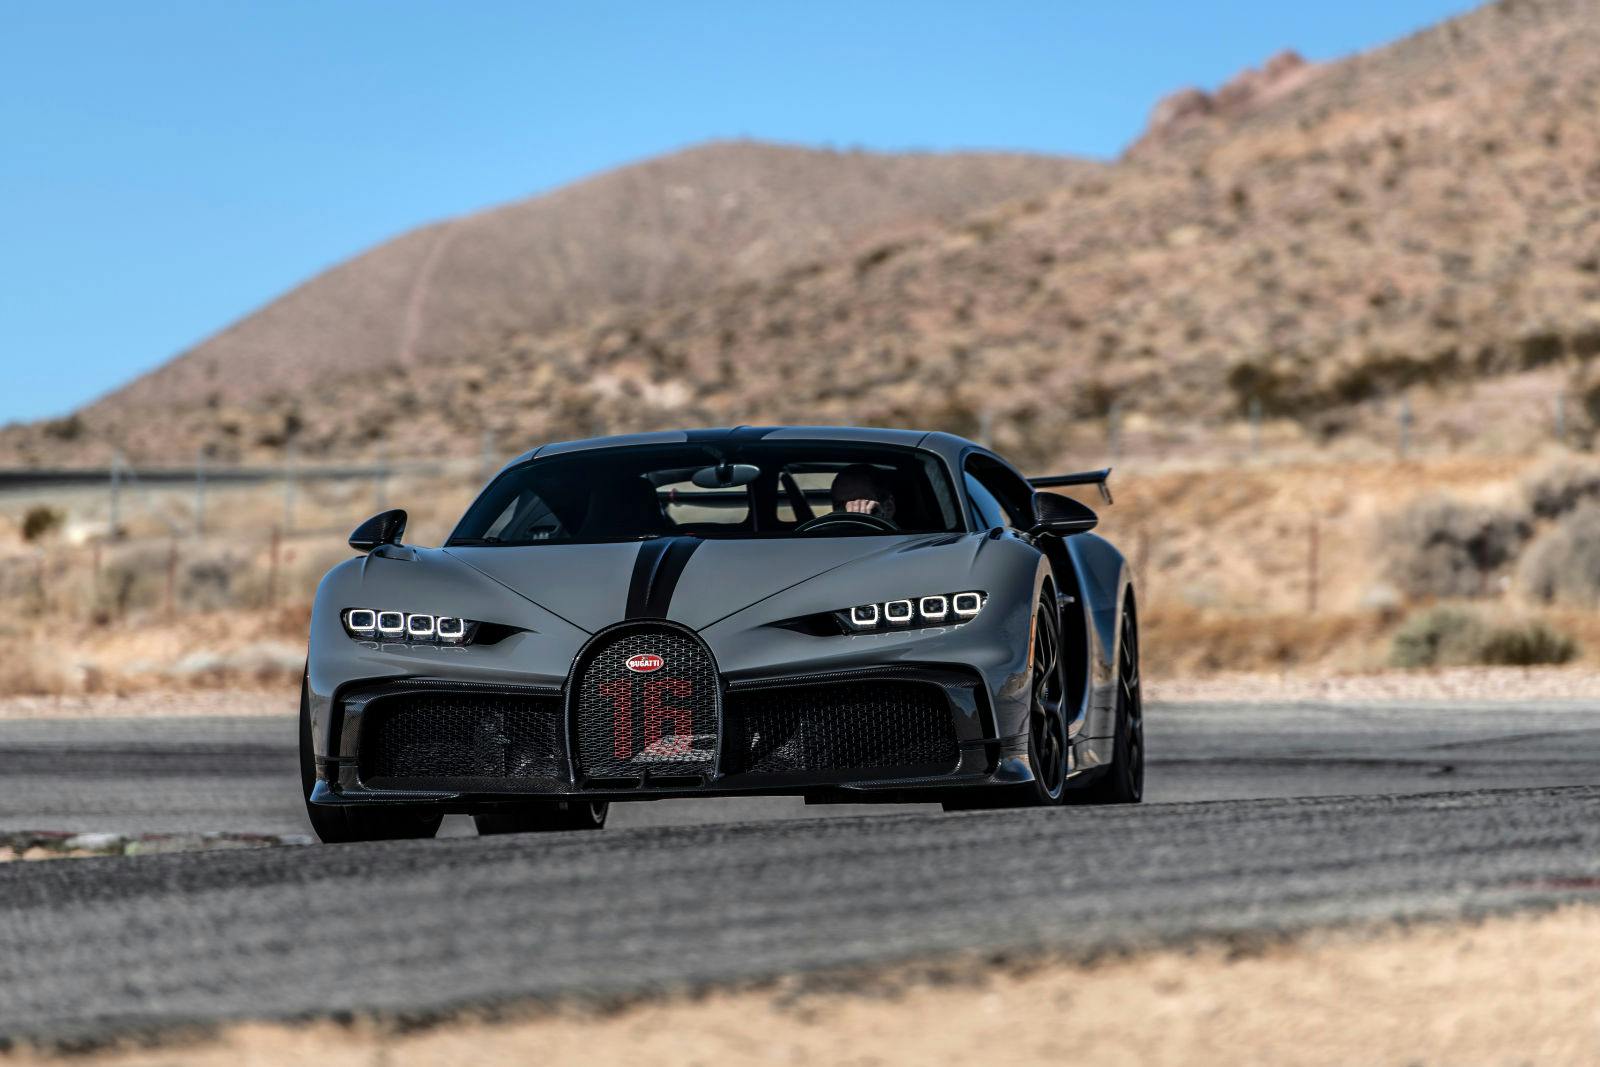 The Bugatti Chiron Pur Sport at Willow Springs International Raceway, California (USA).